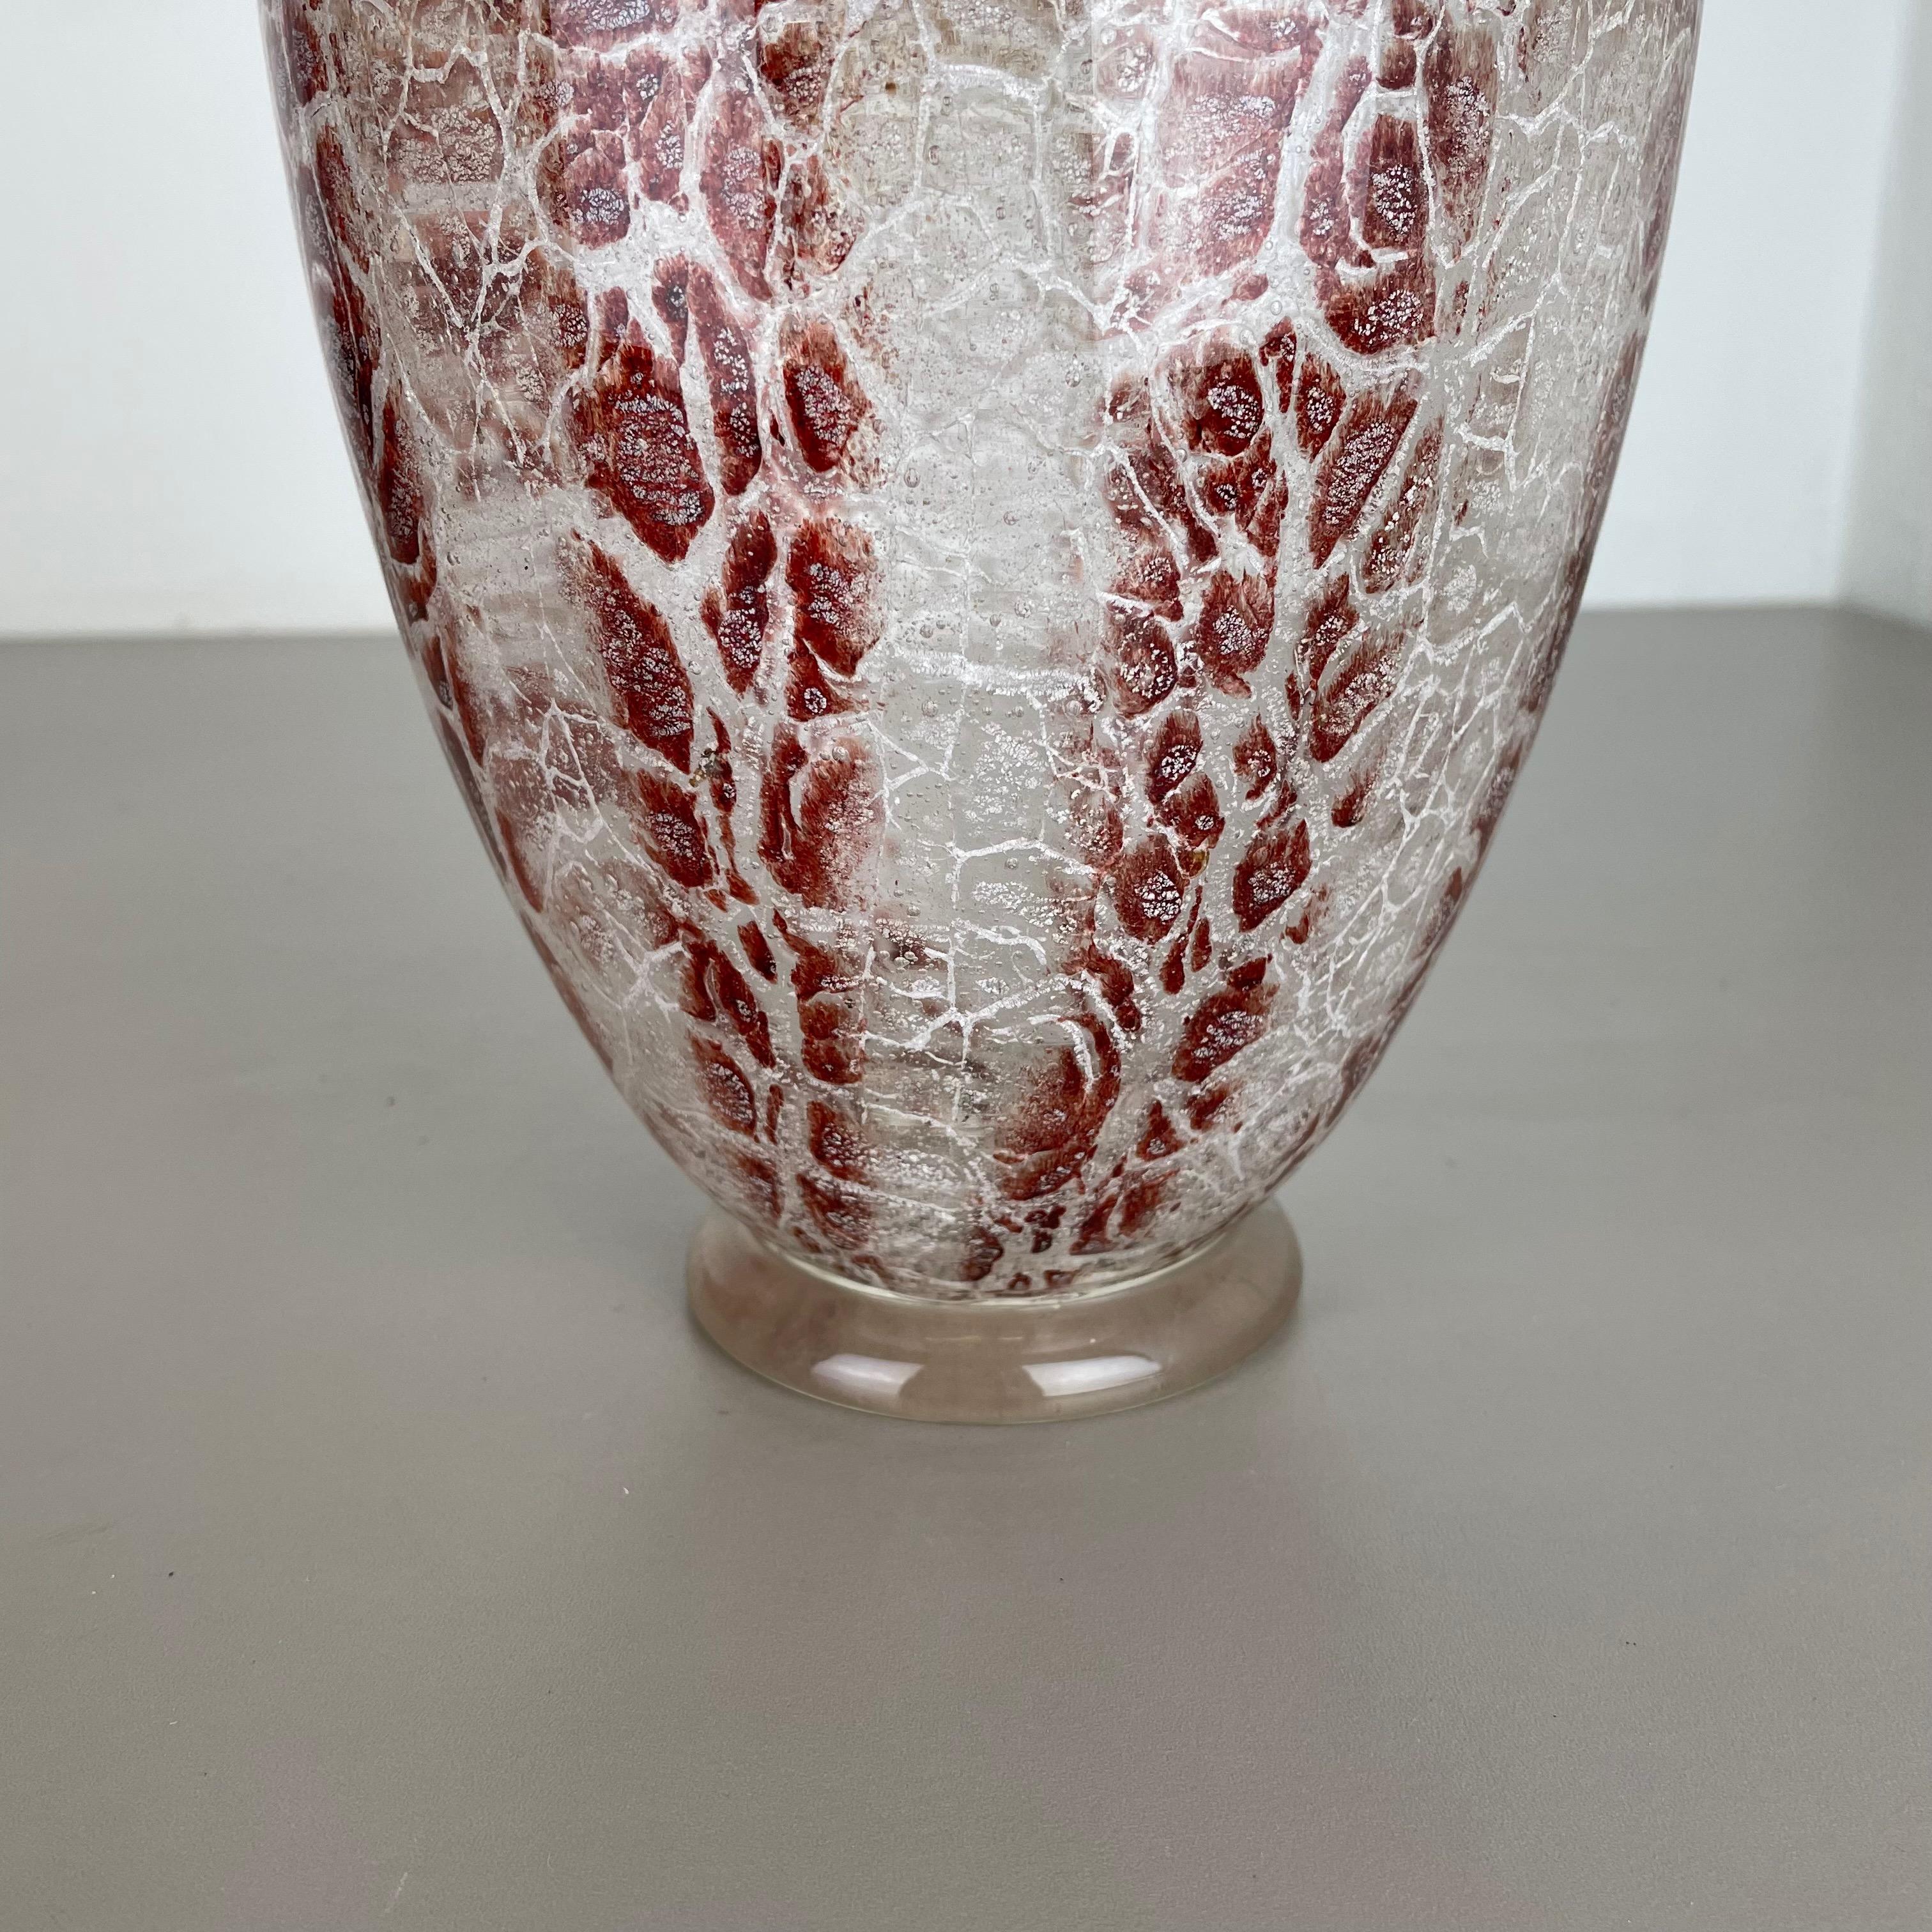 Ikora Glass Vase 2, 3kg by Karl Wiedmann for WMF Germany, 1930s Bauhaus Art Deco For Sale 6